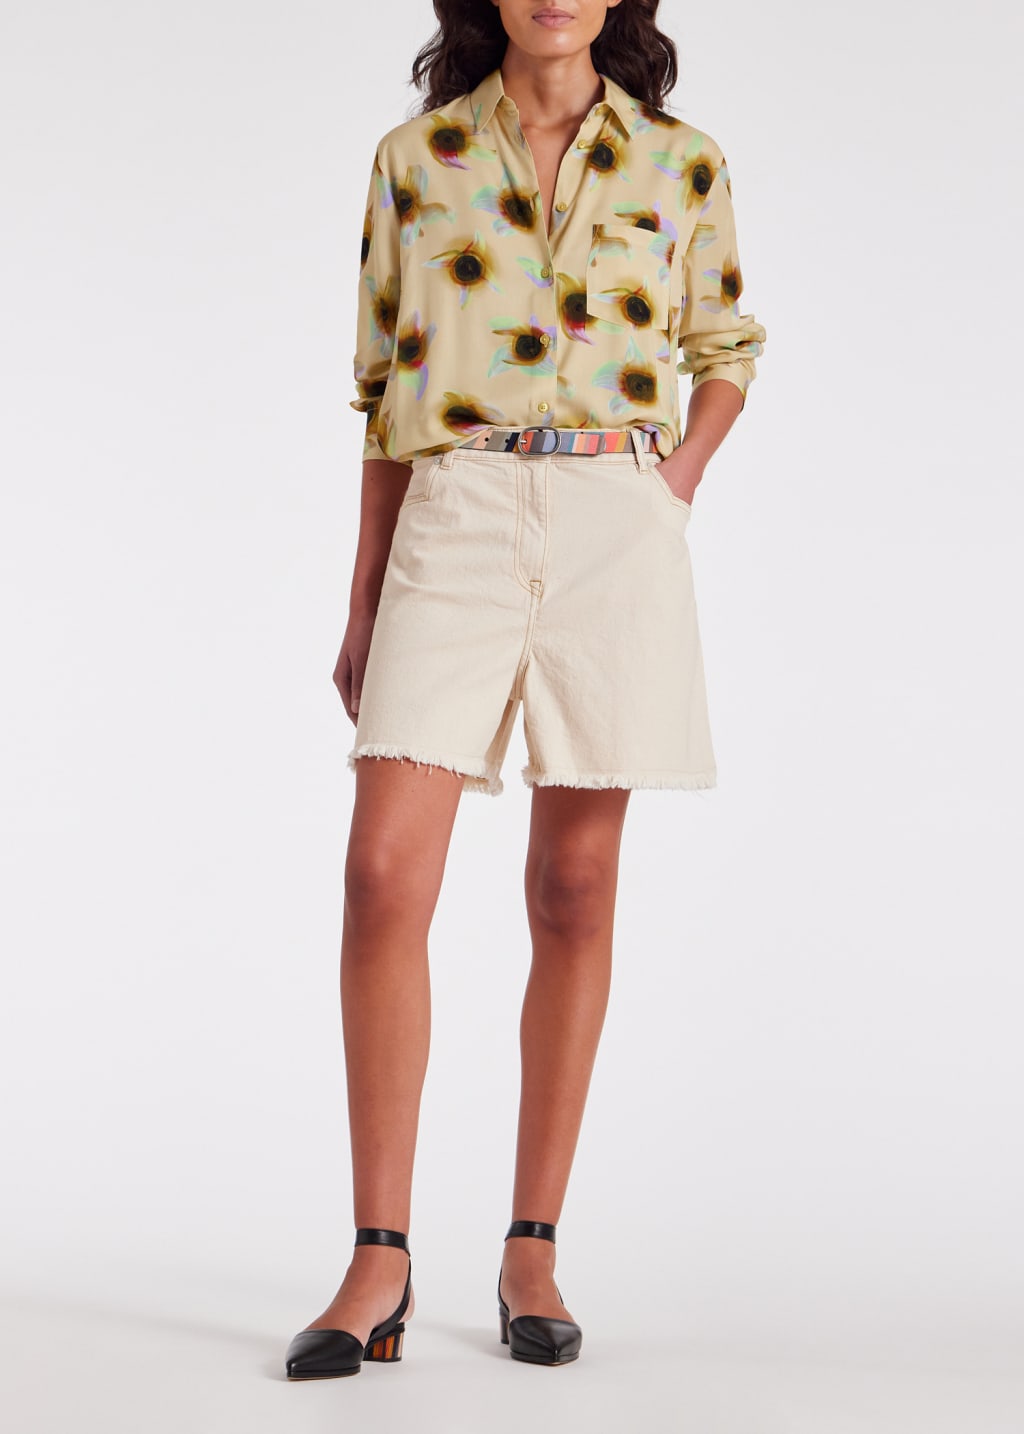 Model View - Lemon 'Ibiza Sunflair' Shirt by Paul Smith